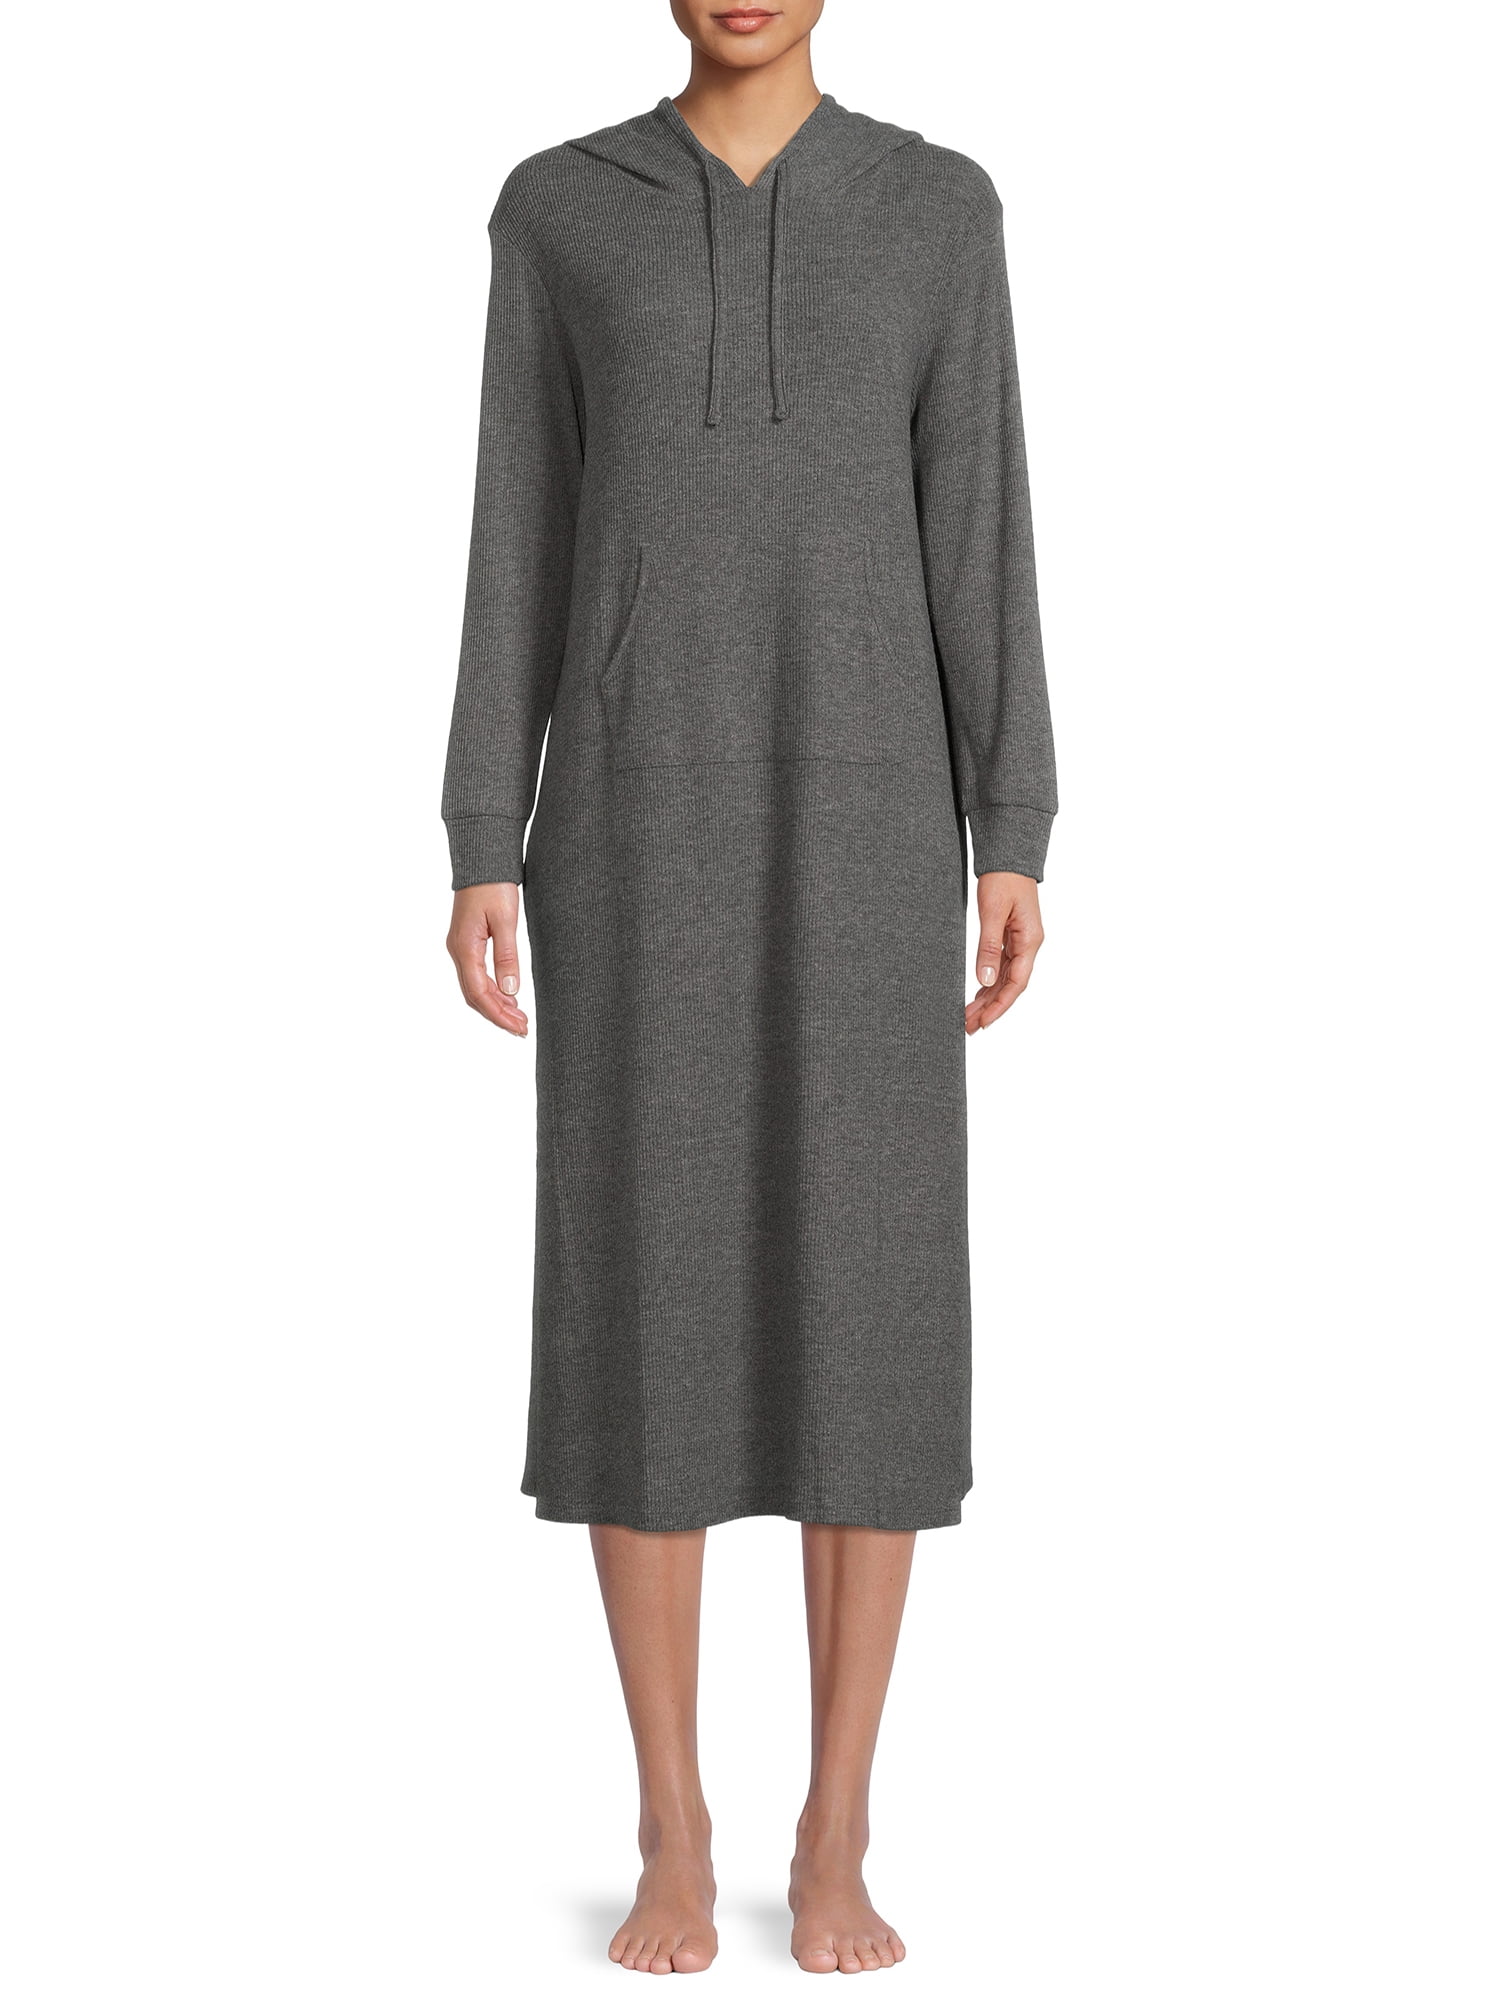 Joyspun Women’s Hacci Solid Hooded Sleepshirt - Walmart.com